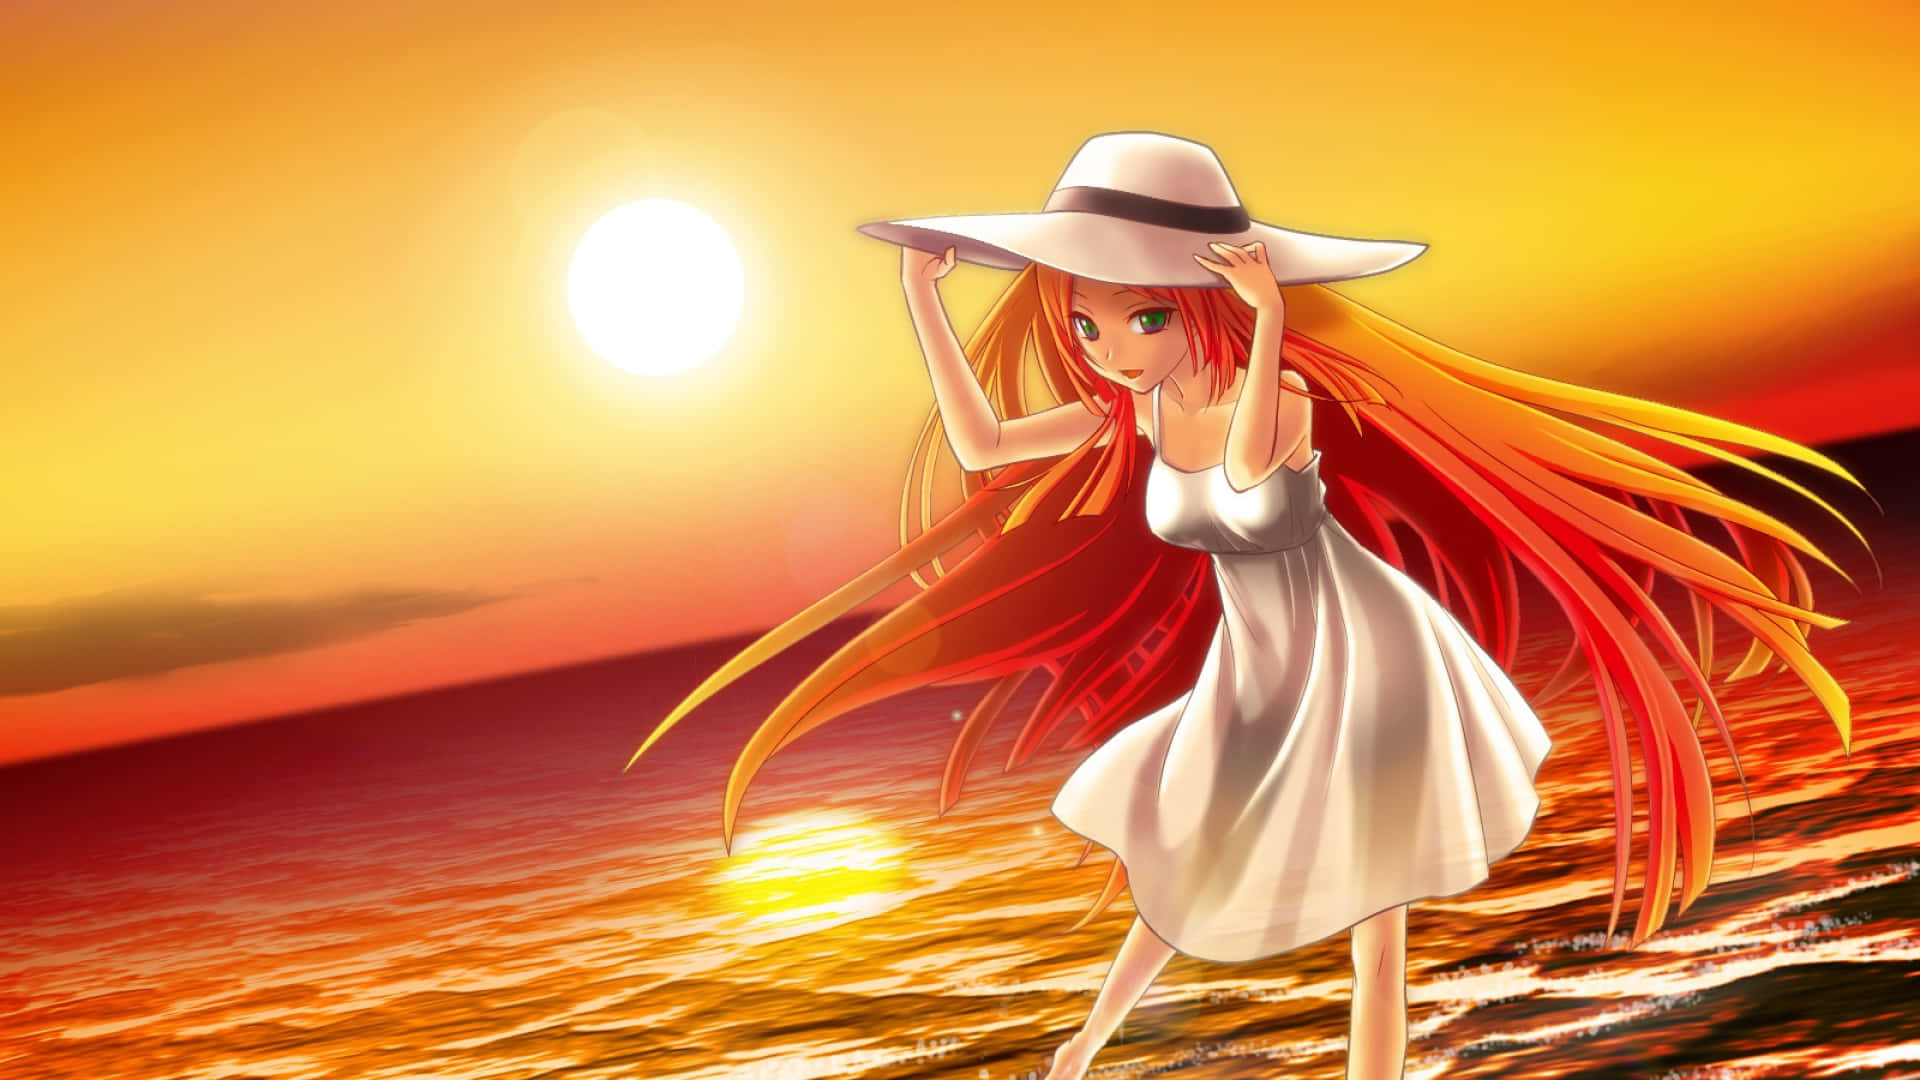 Premium AI Image  sunset sky anime style